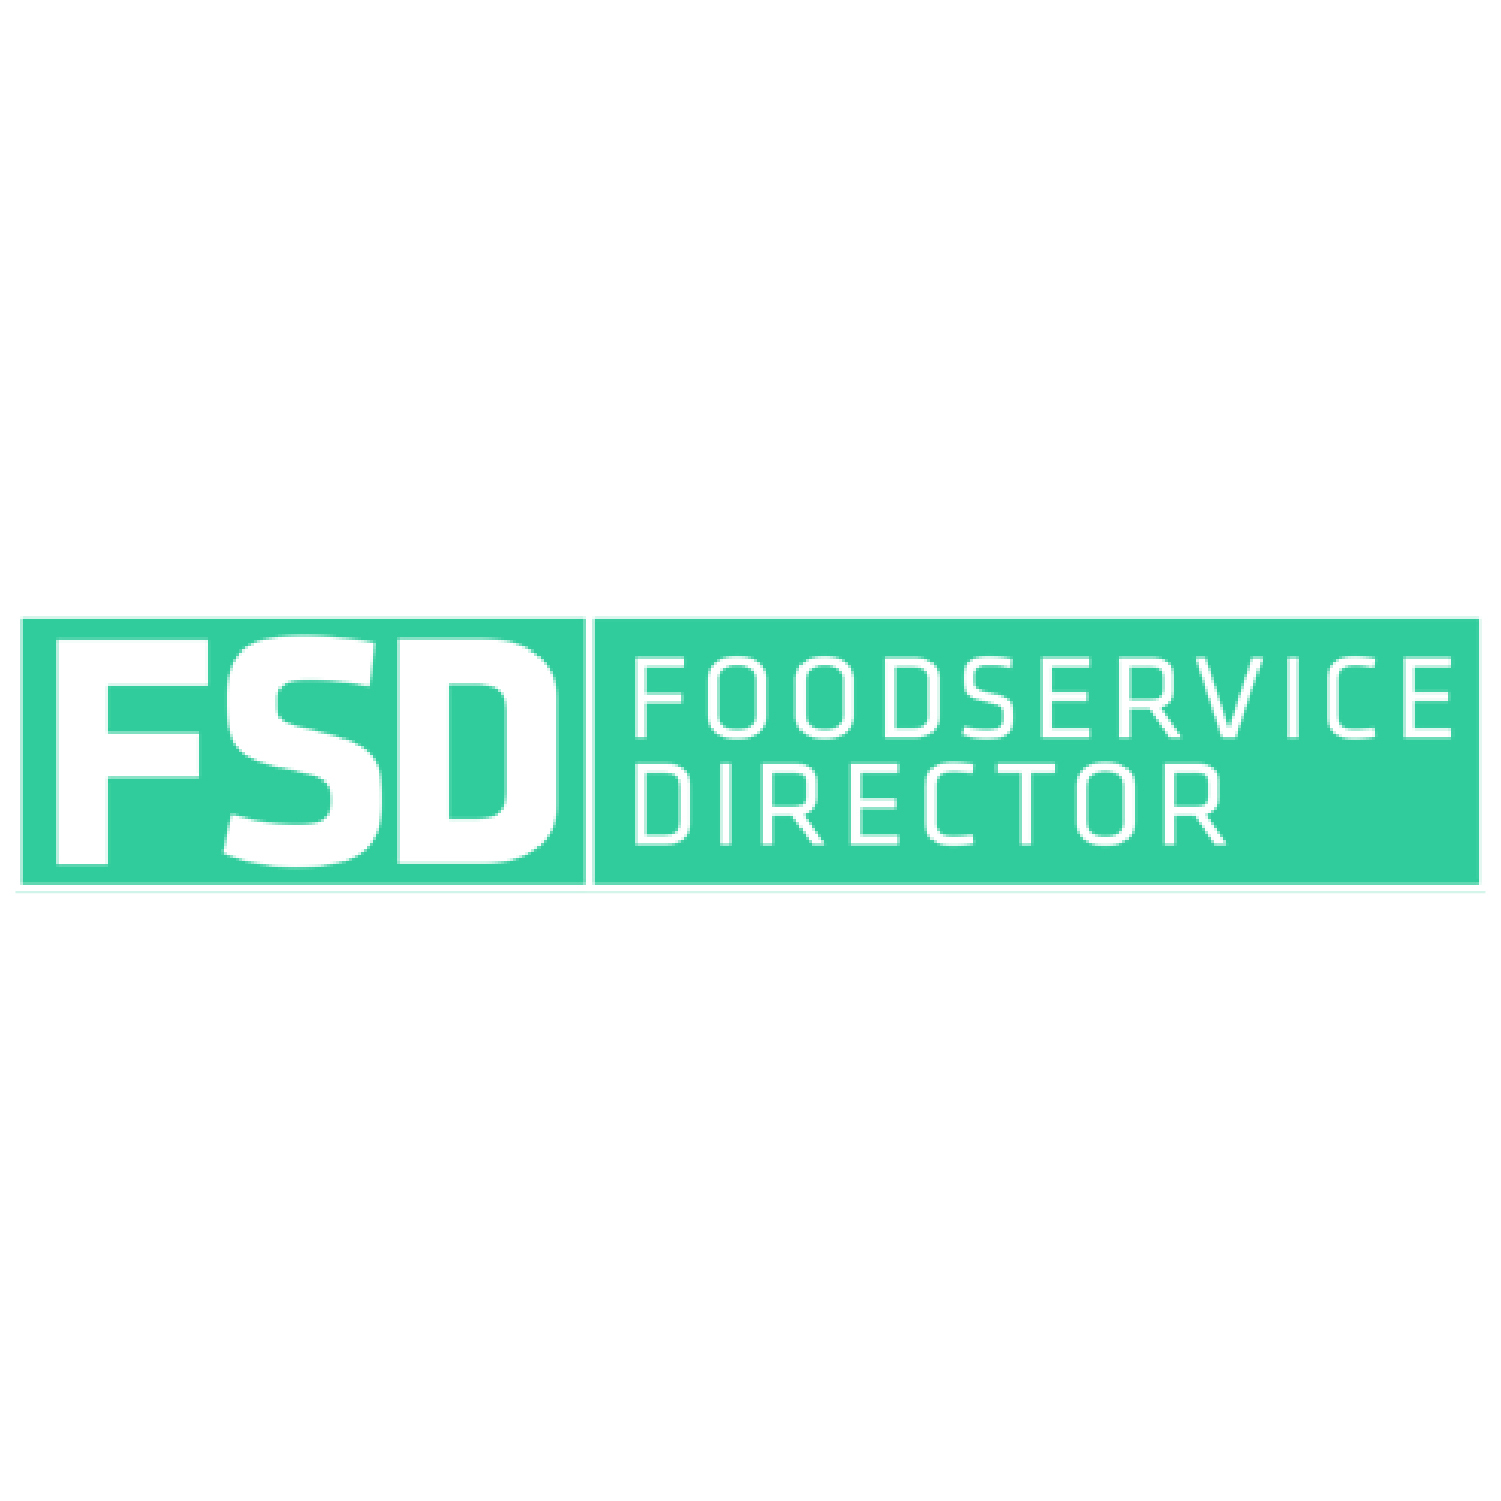 FSD Magazine Logo